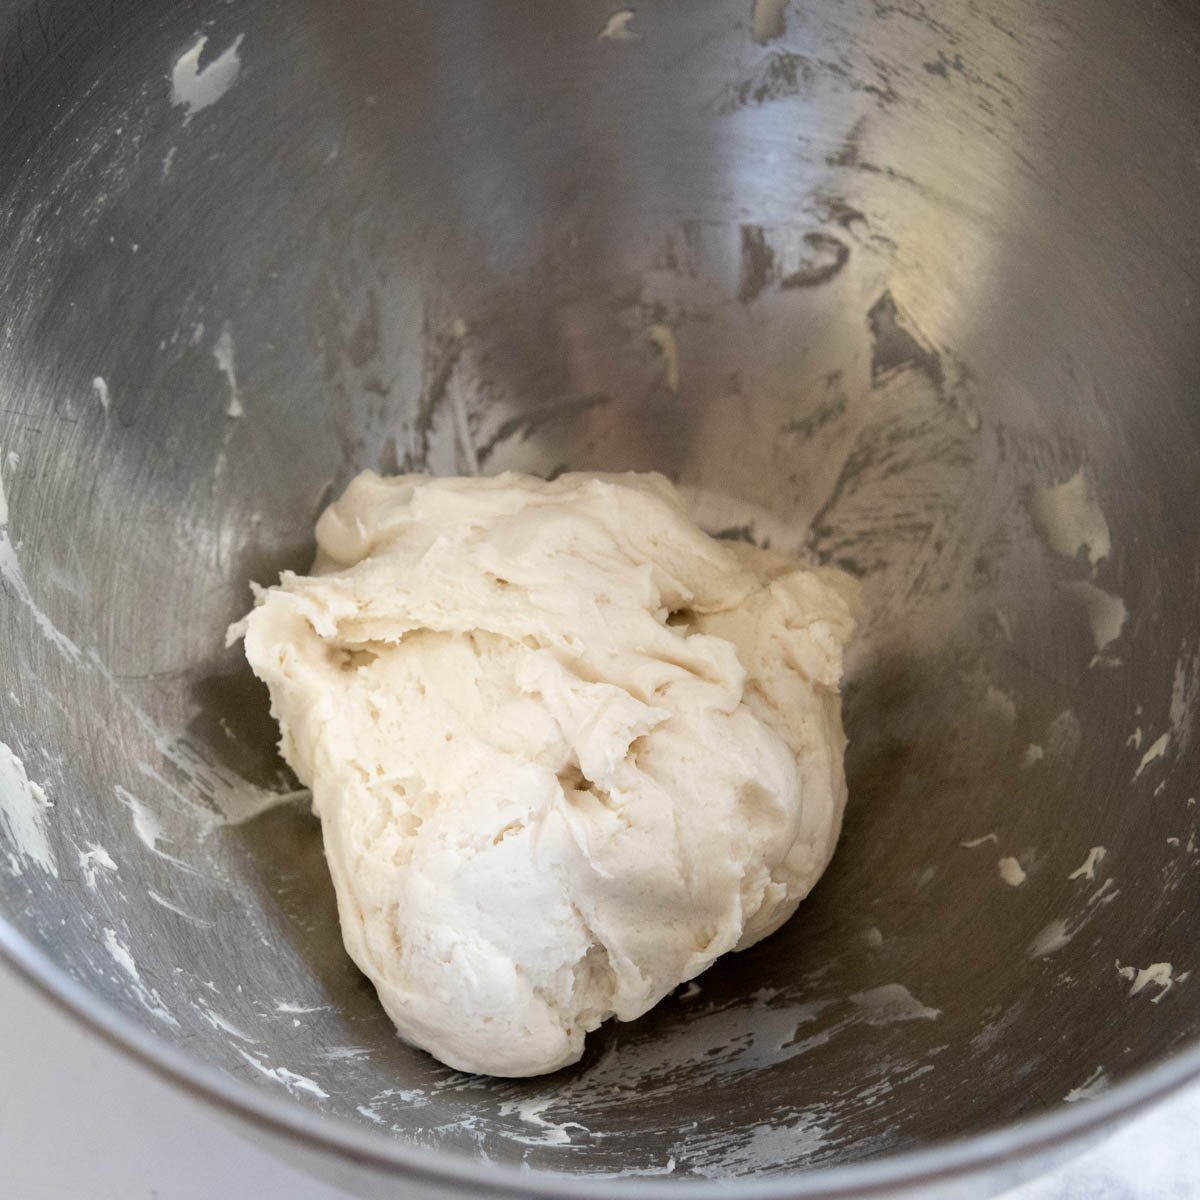 dough before rising.